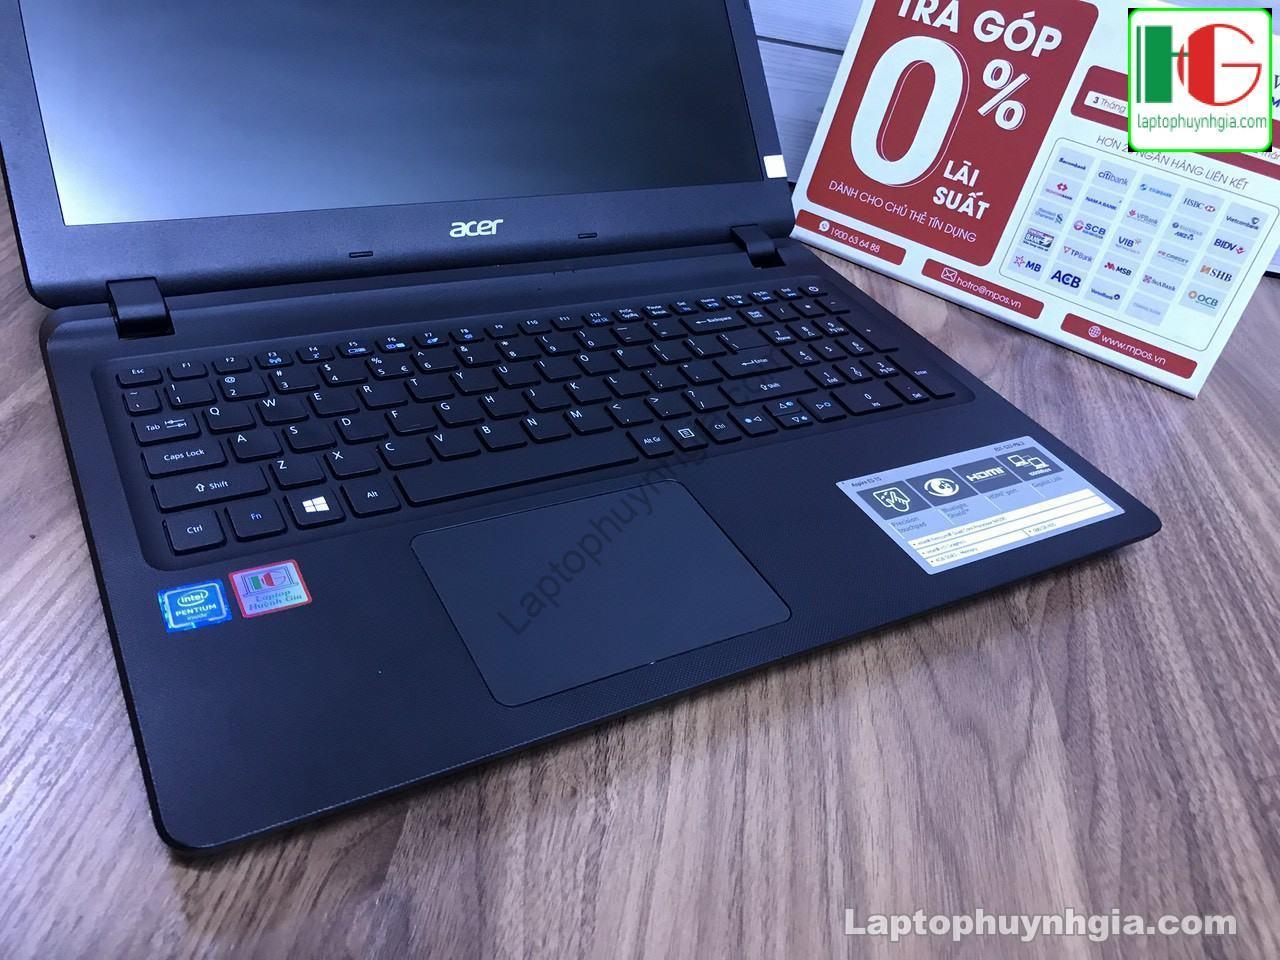 Laptop Acer 533 N4200u 4g 500g Lcd 15 Laptopcubinhduong.vn 4